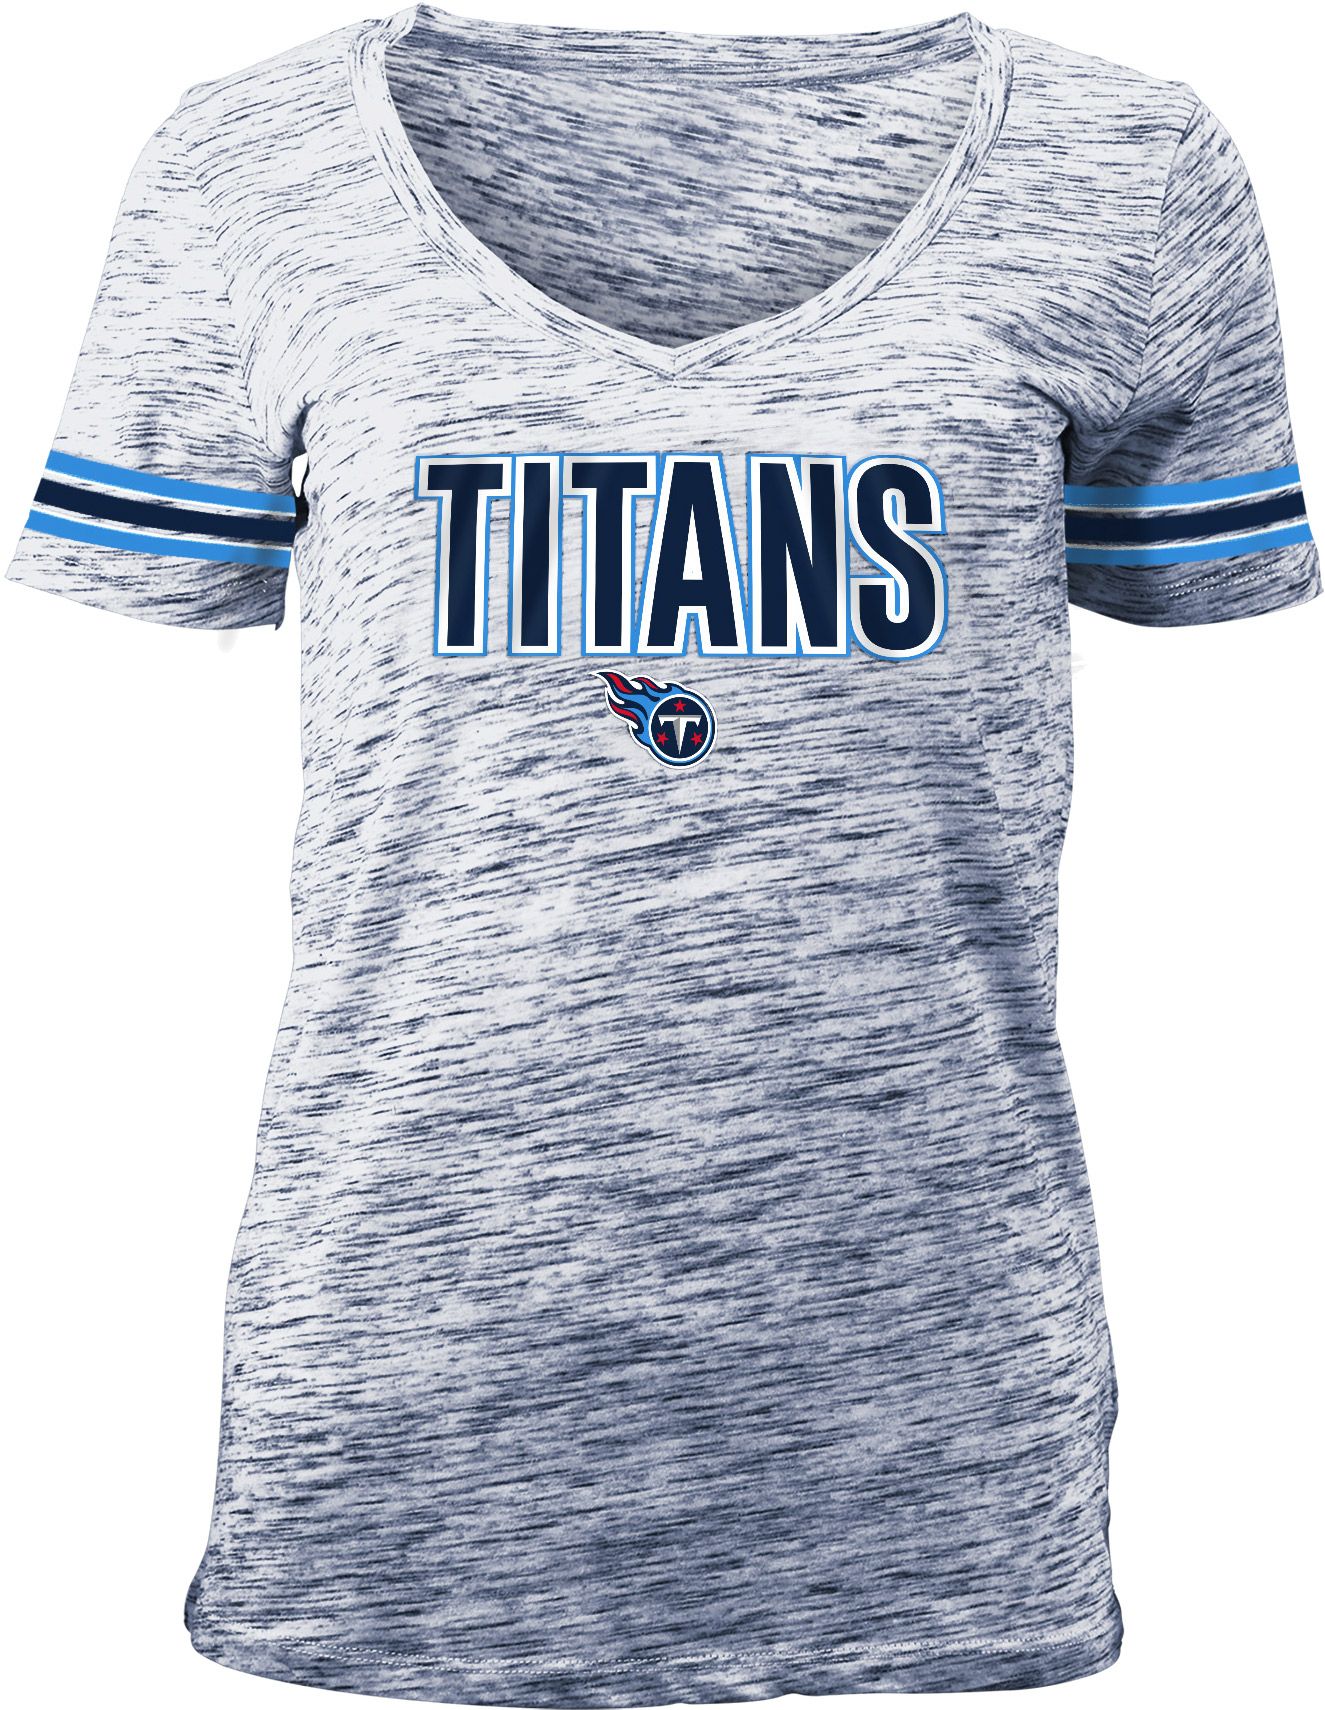 titans women's jersey